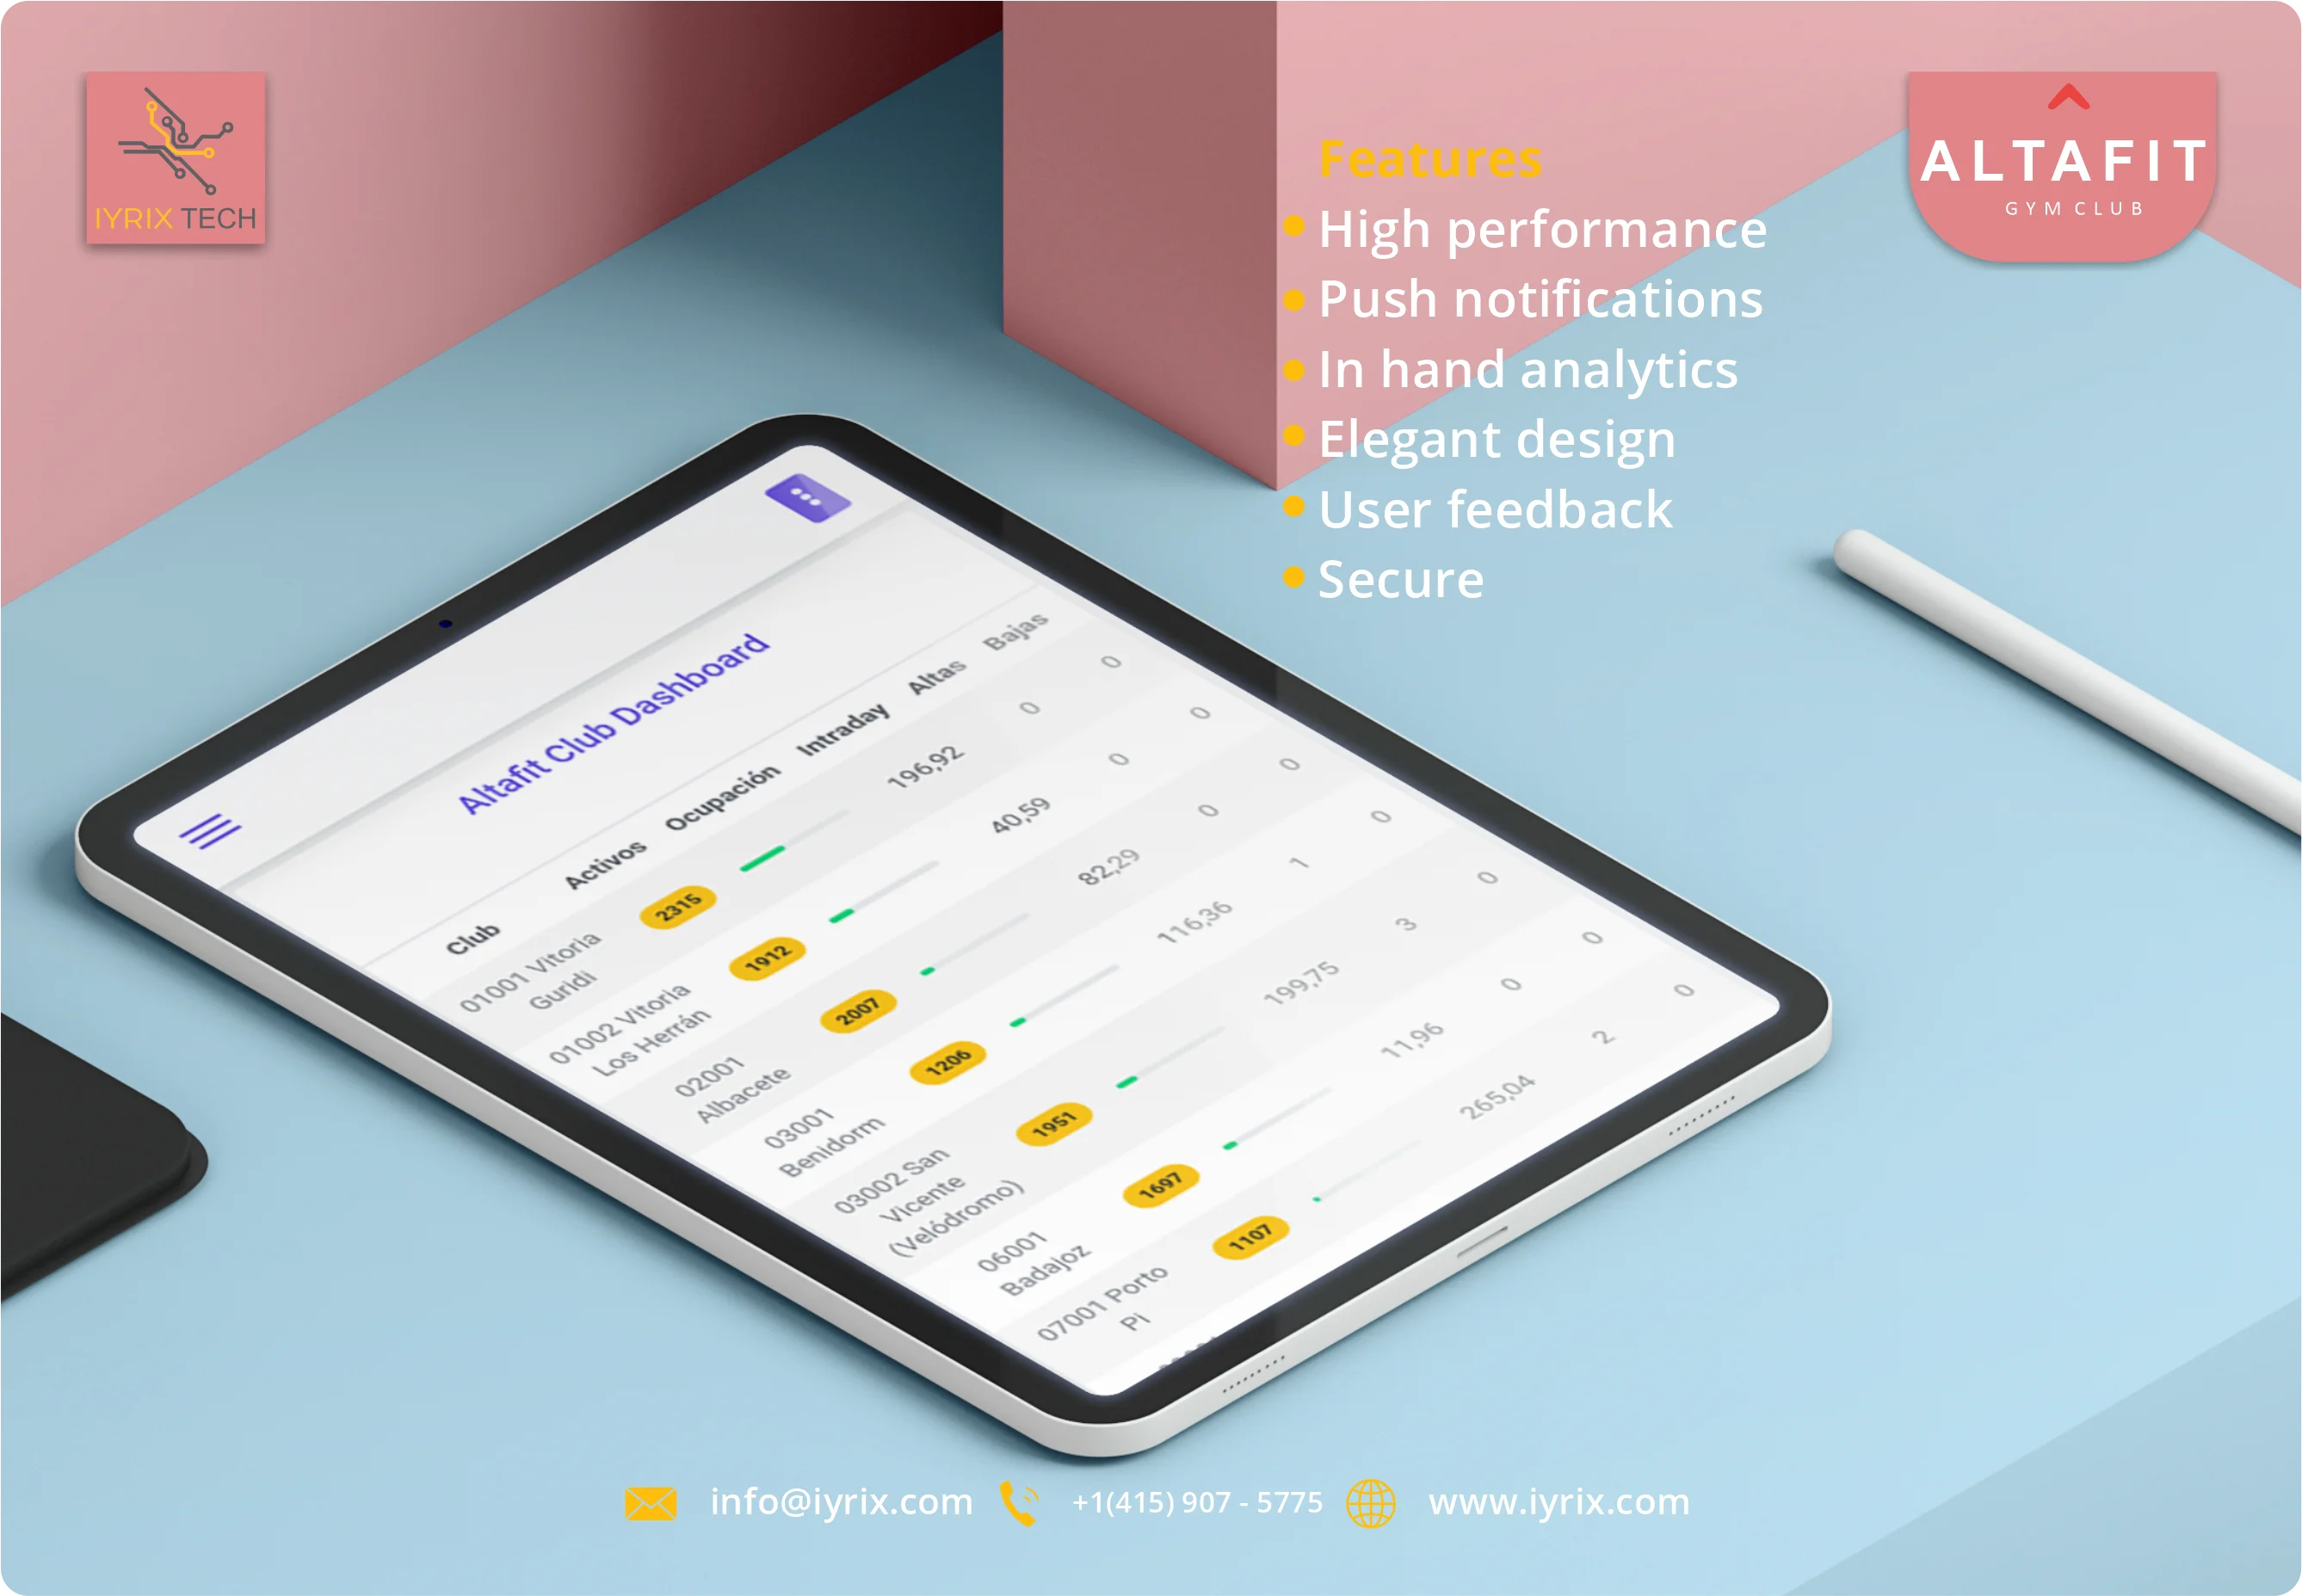 High performance
                                                                Push notifications
                                                                In hand analytics
                                                                Elegant design
                                                                User feedback
                                                                Secure
                                                                